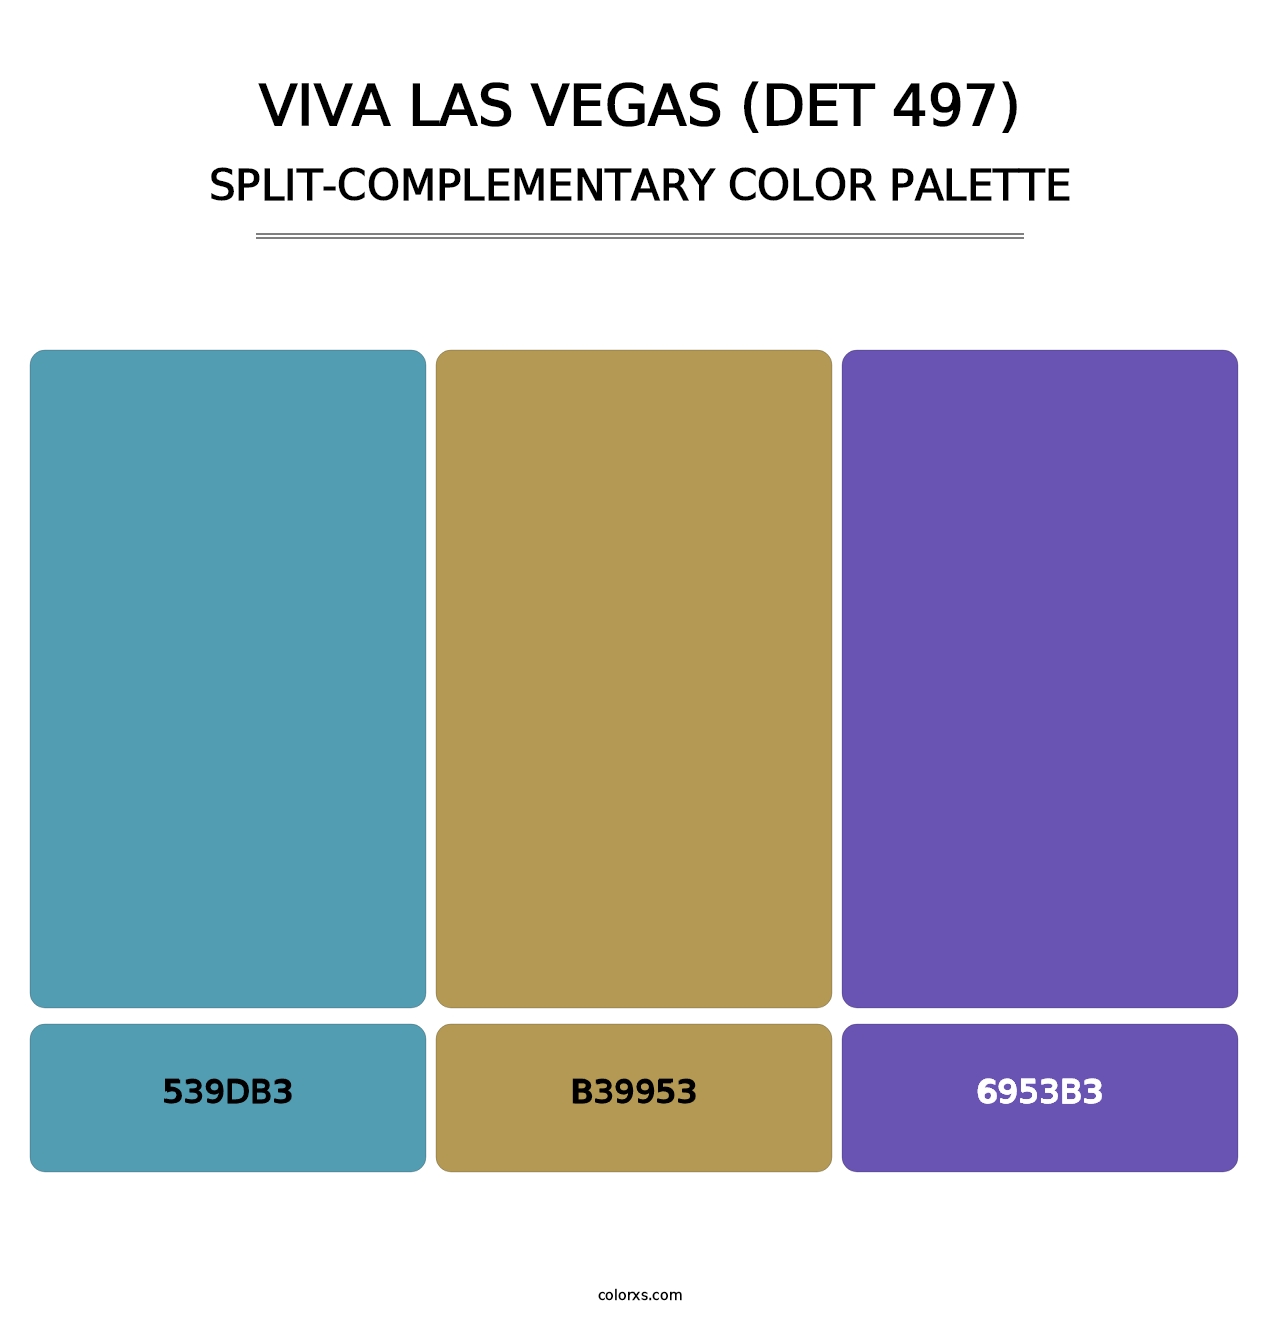 Viva Las Vegas (DET 497) - Split-Complementary Color Palette